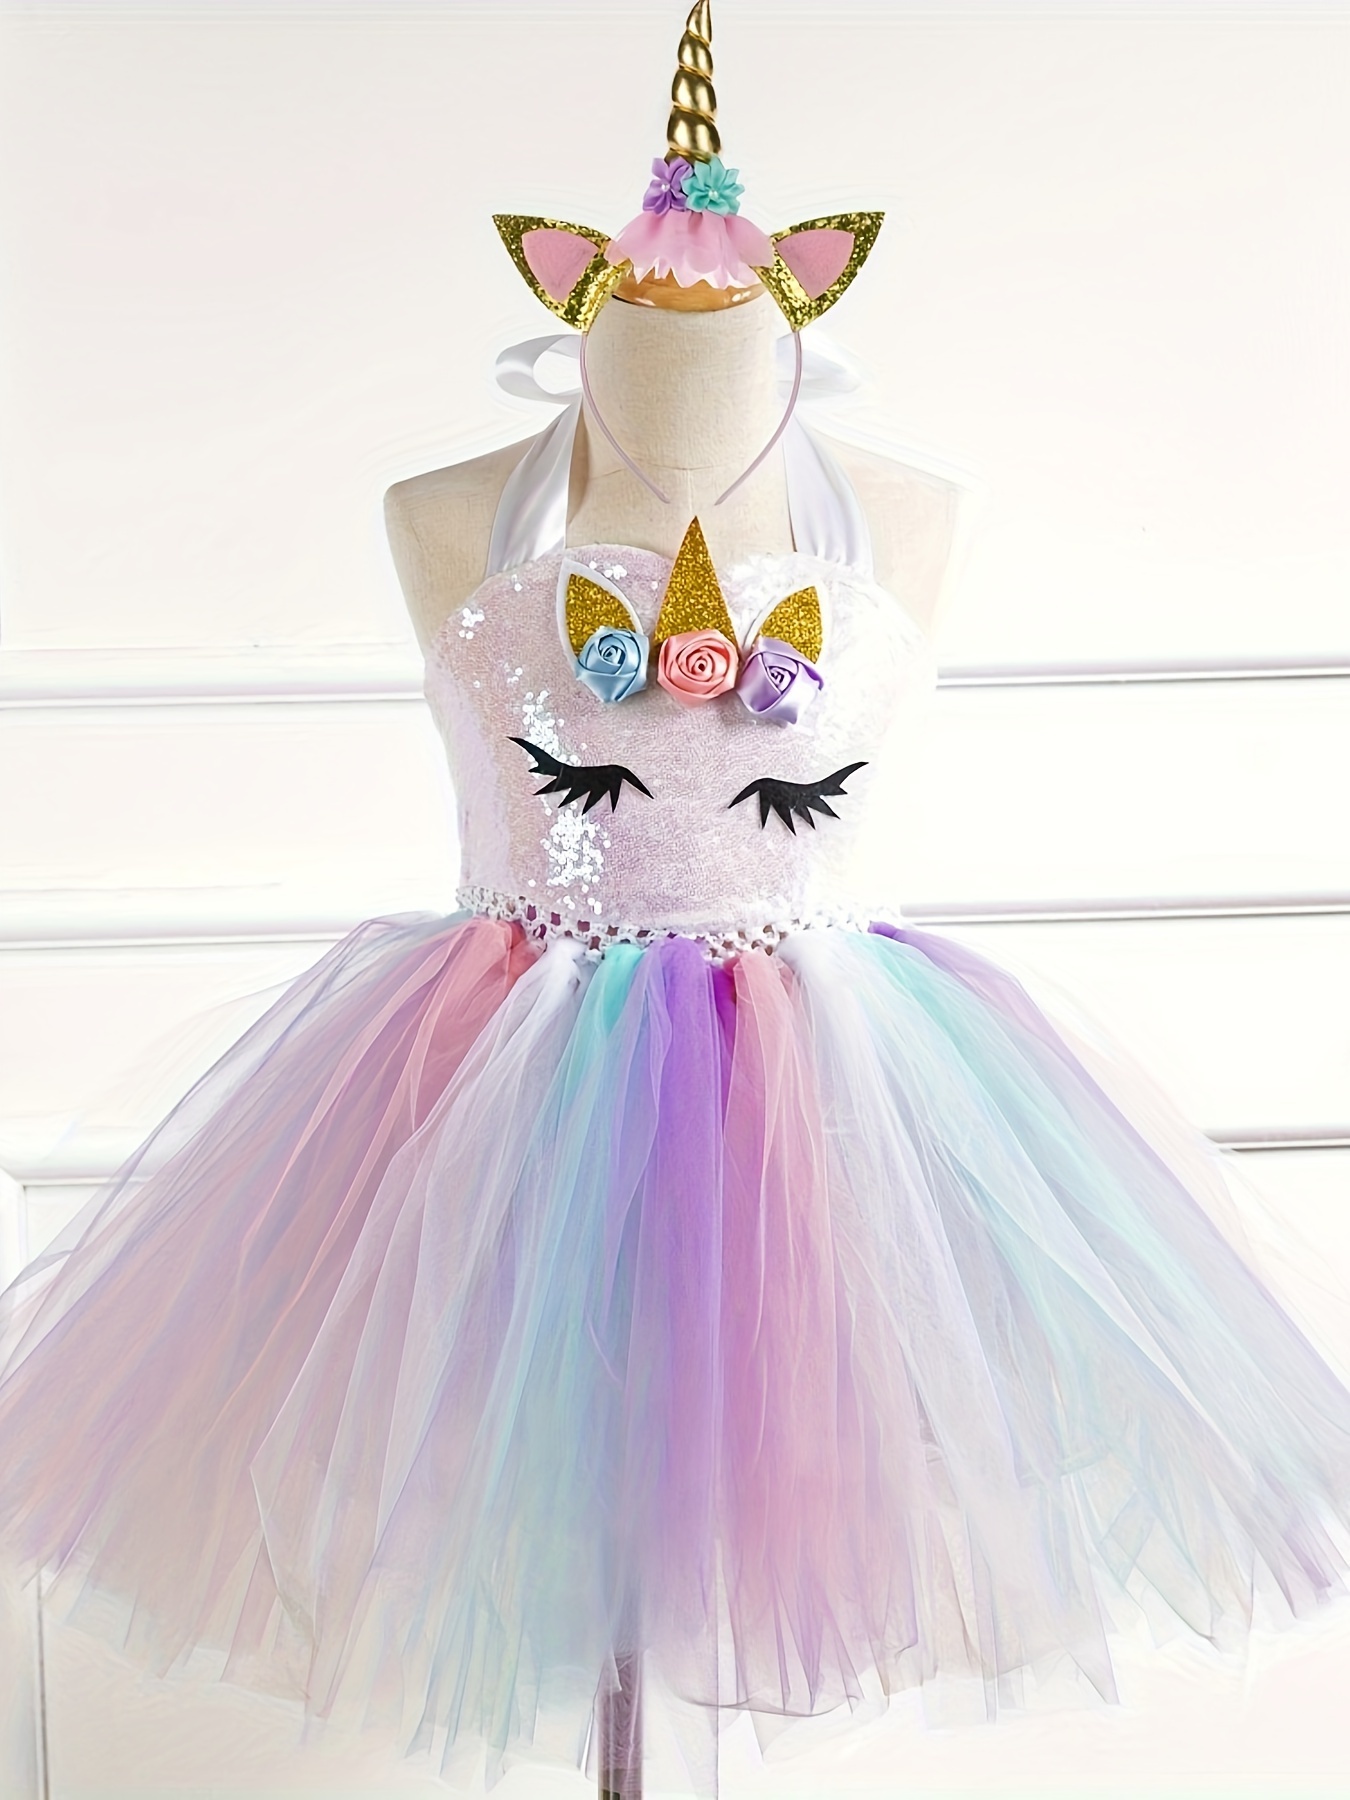 Disfraz princesa unicornio para niña